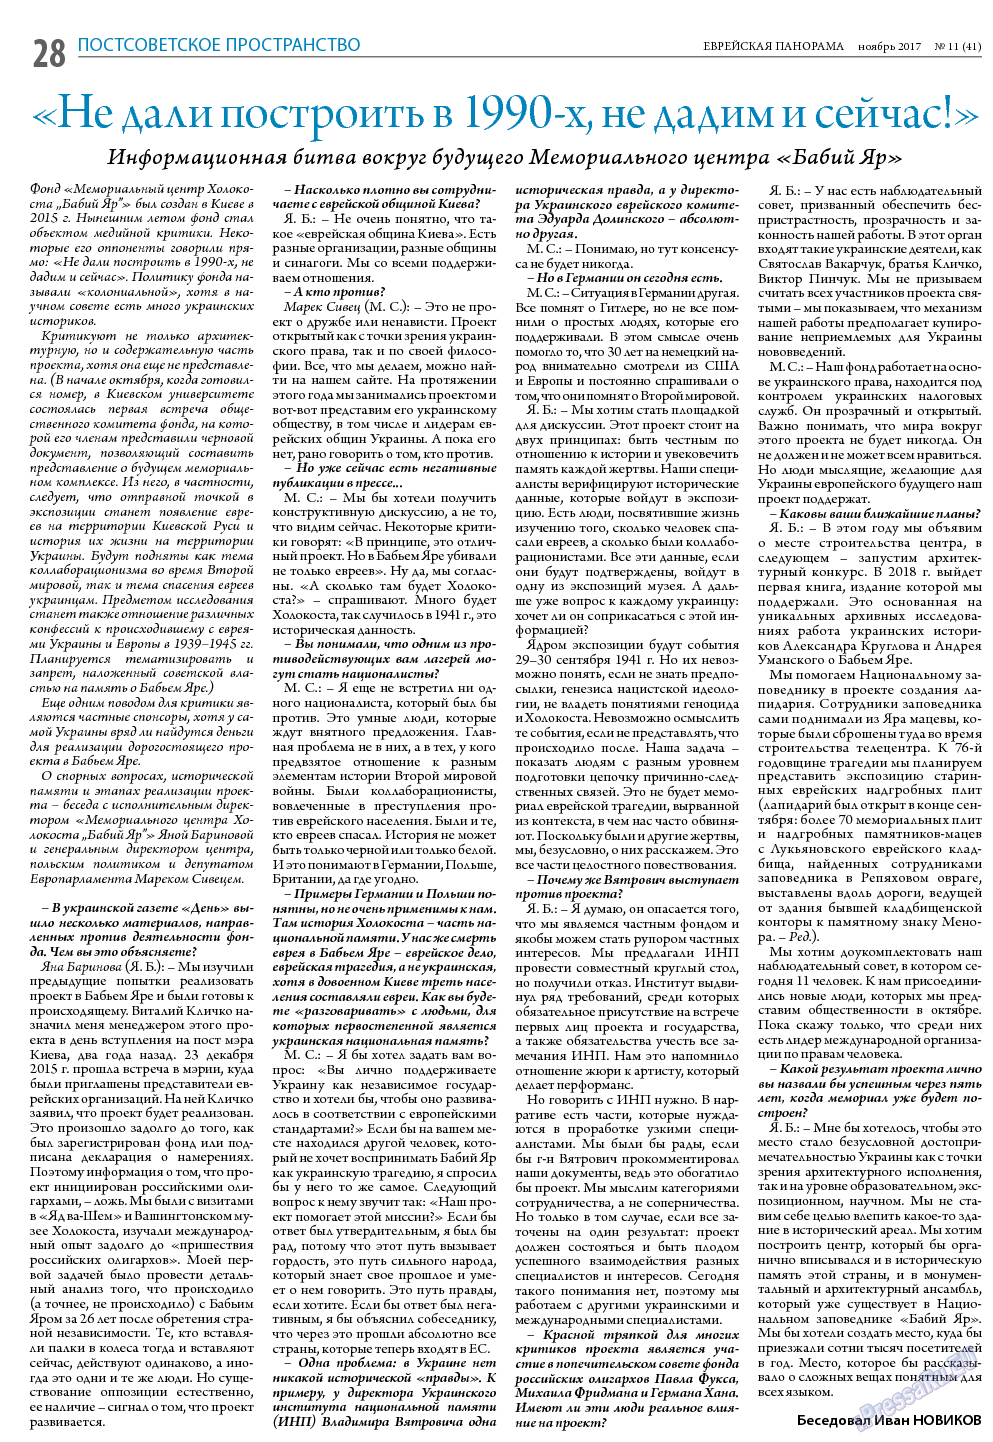 Еврейская панорама, газета. 2017 №11 стр.28